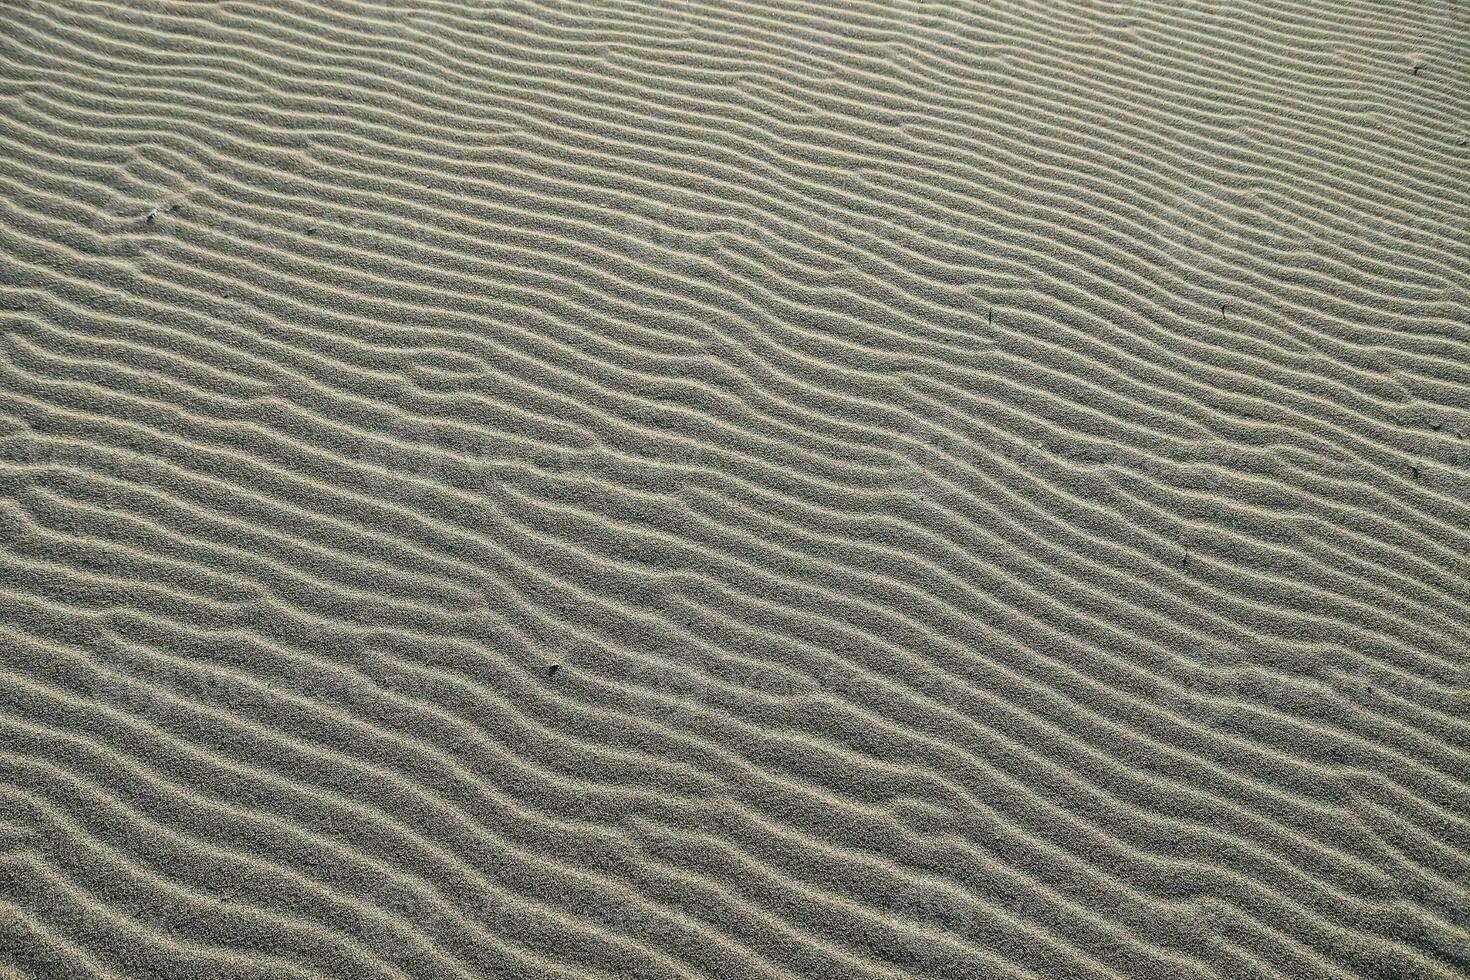 Sand texture background photo